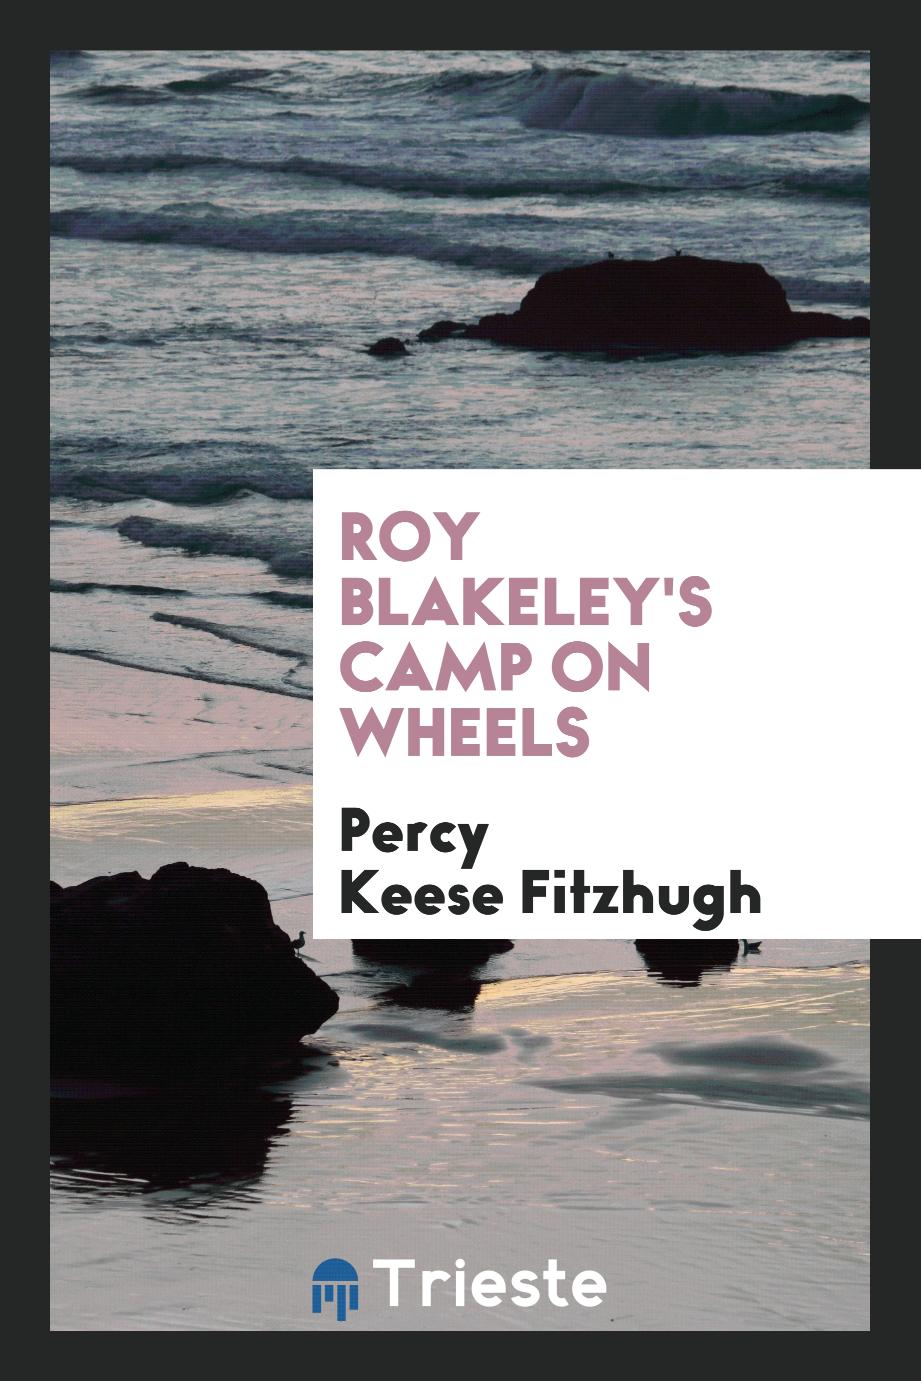 Roy Blakeley's camp on wheels